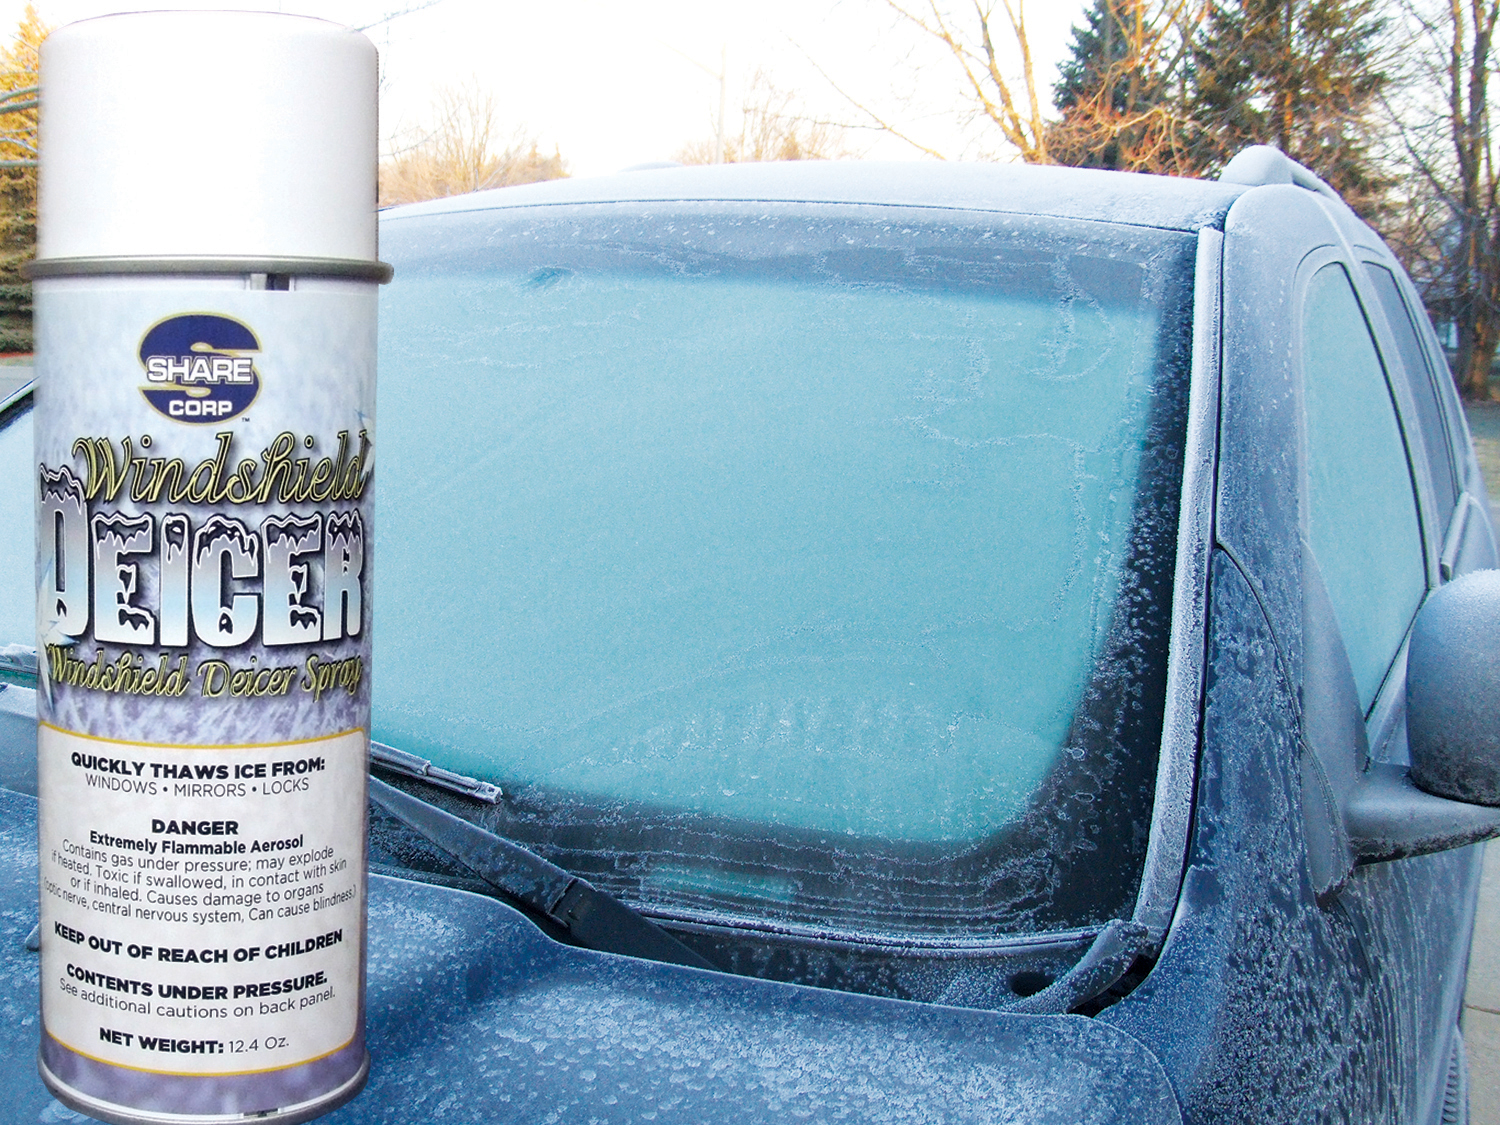 Car Glass Deicing & Anti-Freeze Spray, Deicer Spray for Car